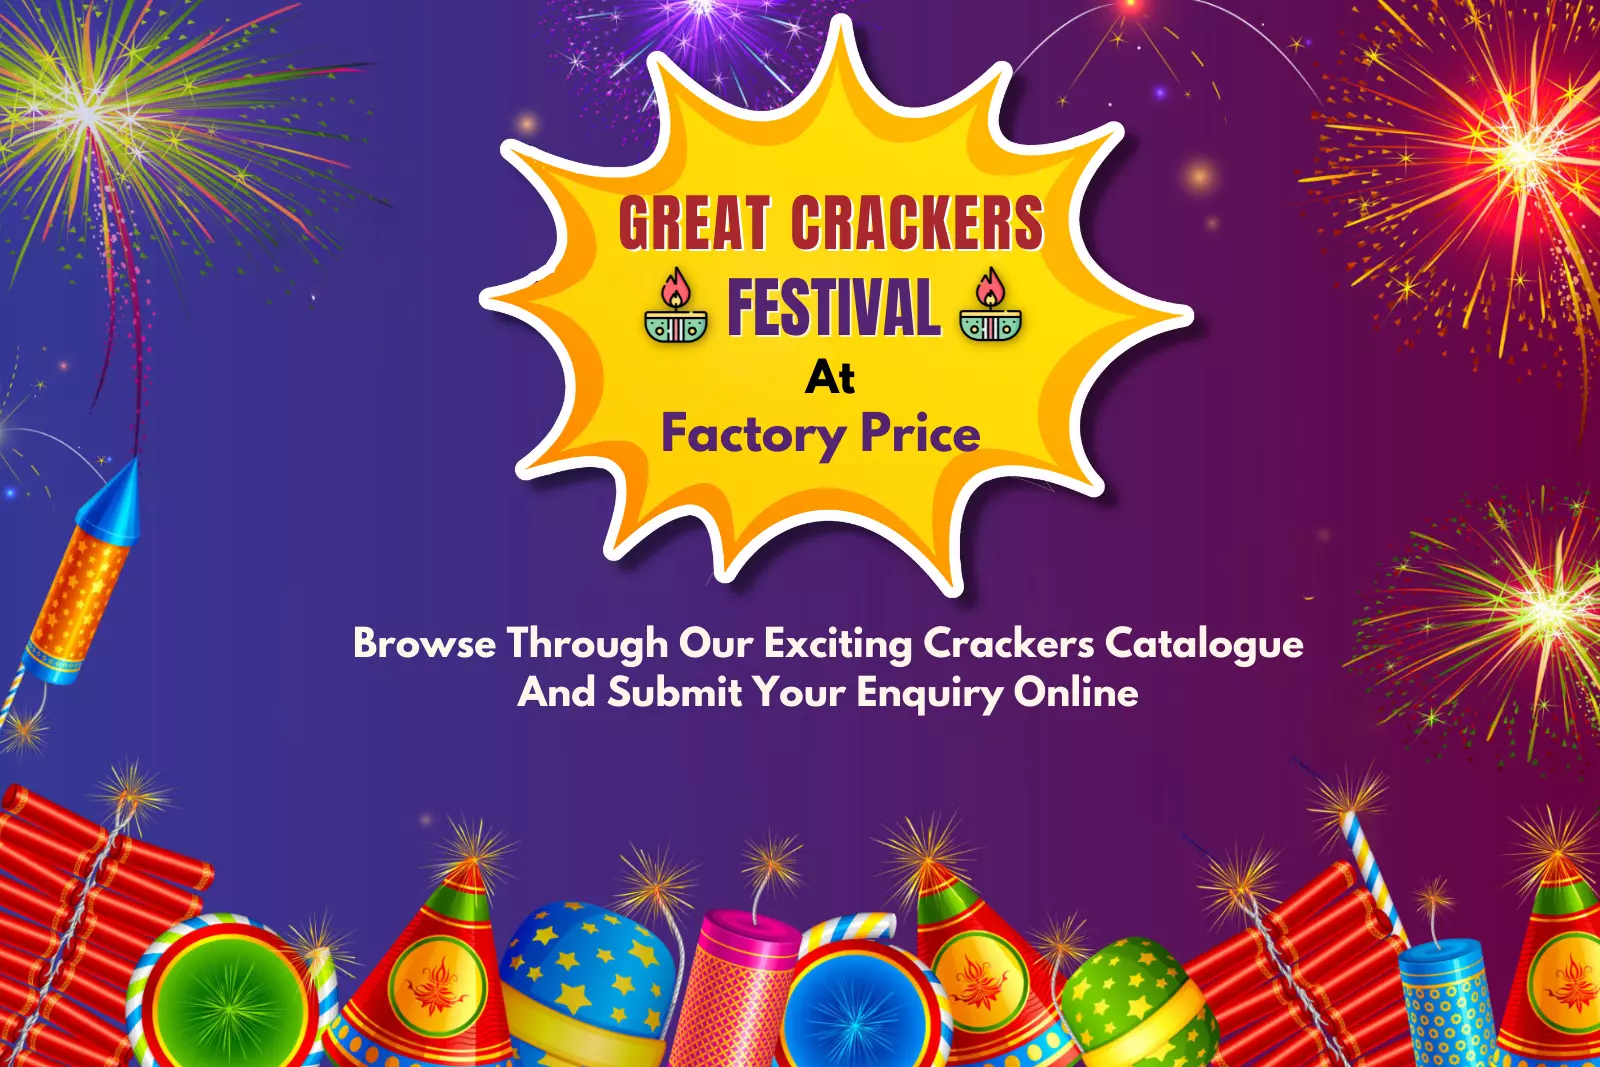 Great Crackers festival in dharapuram at factory price